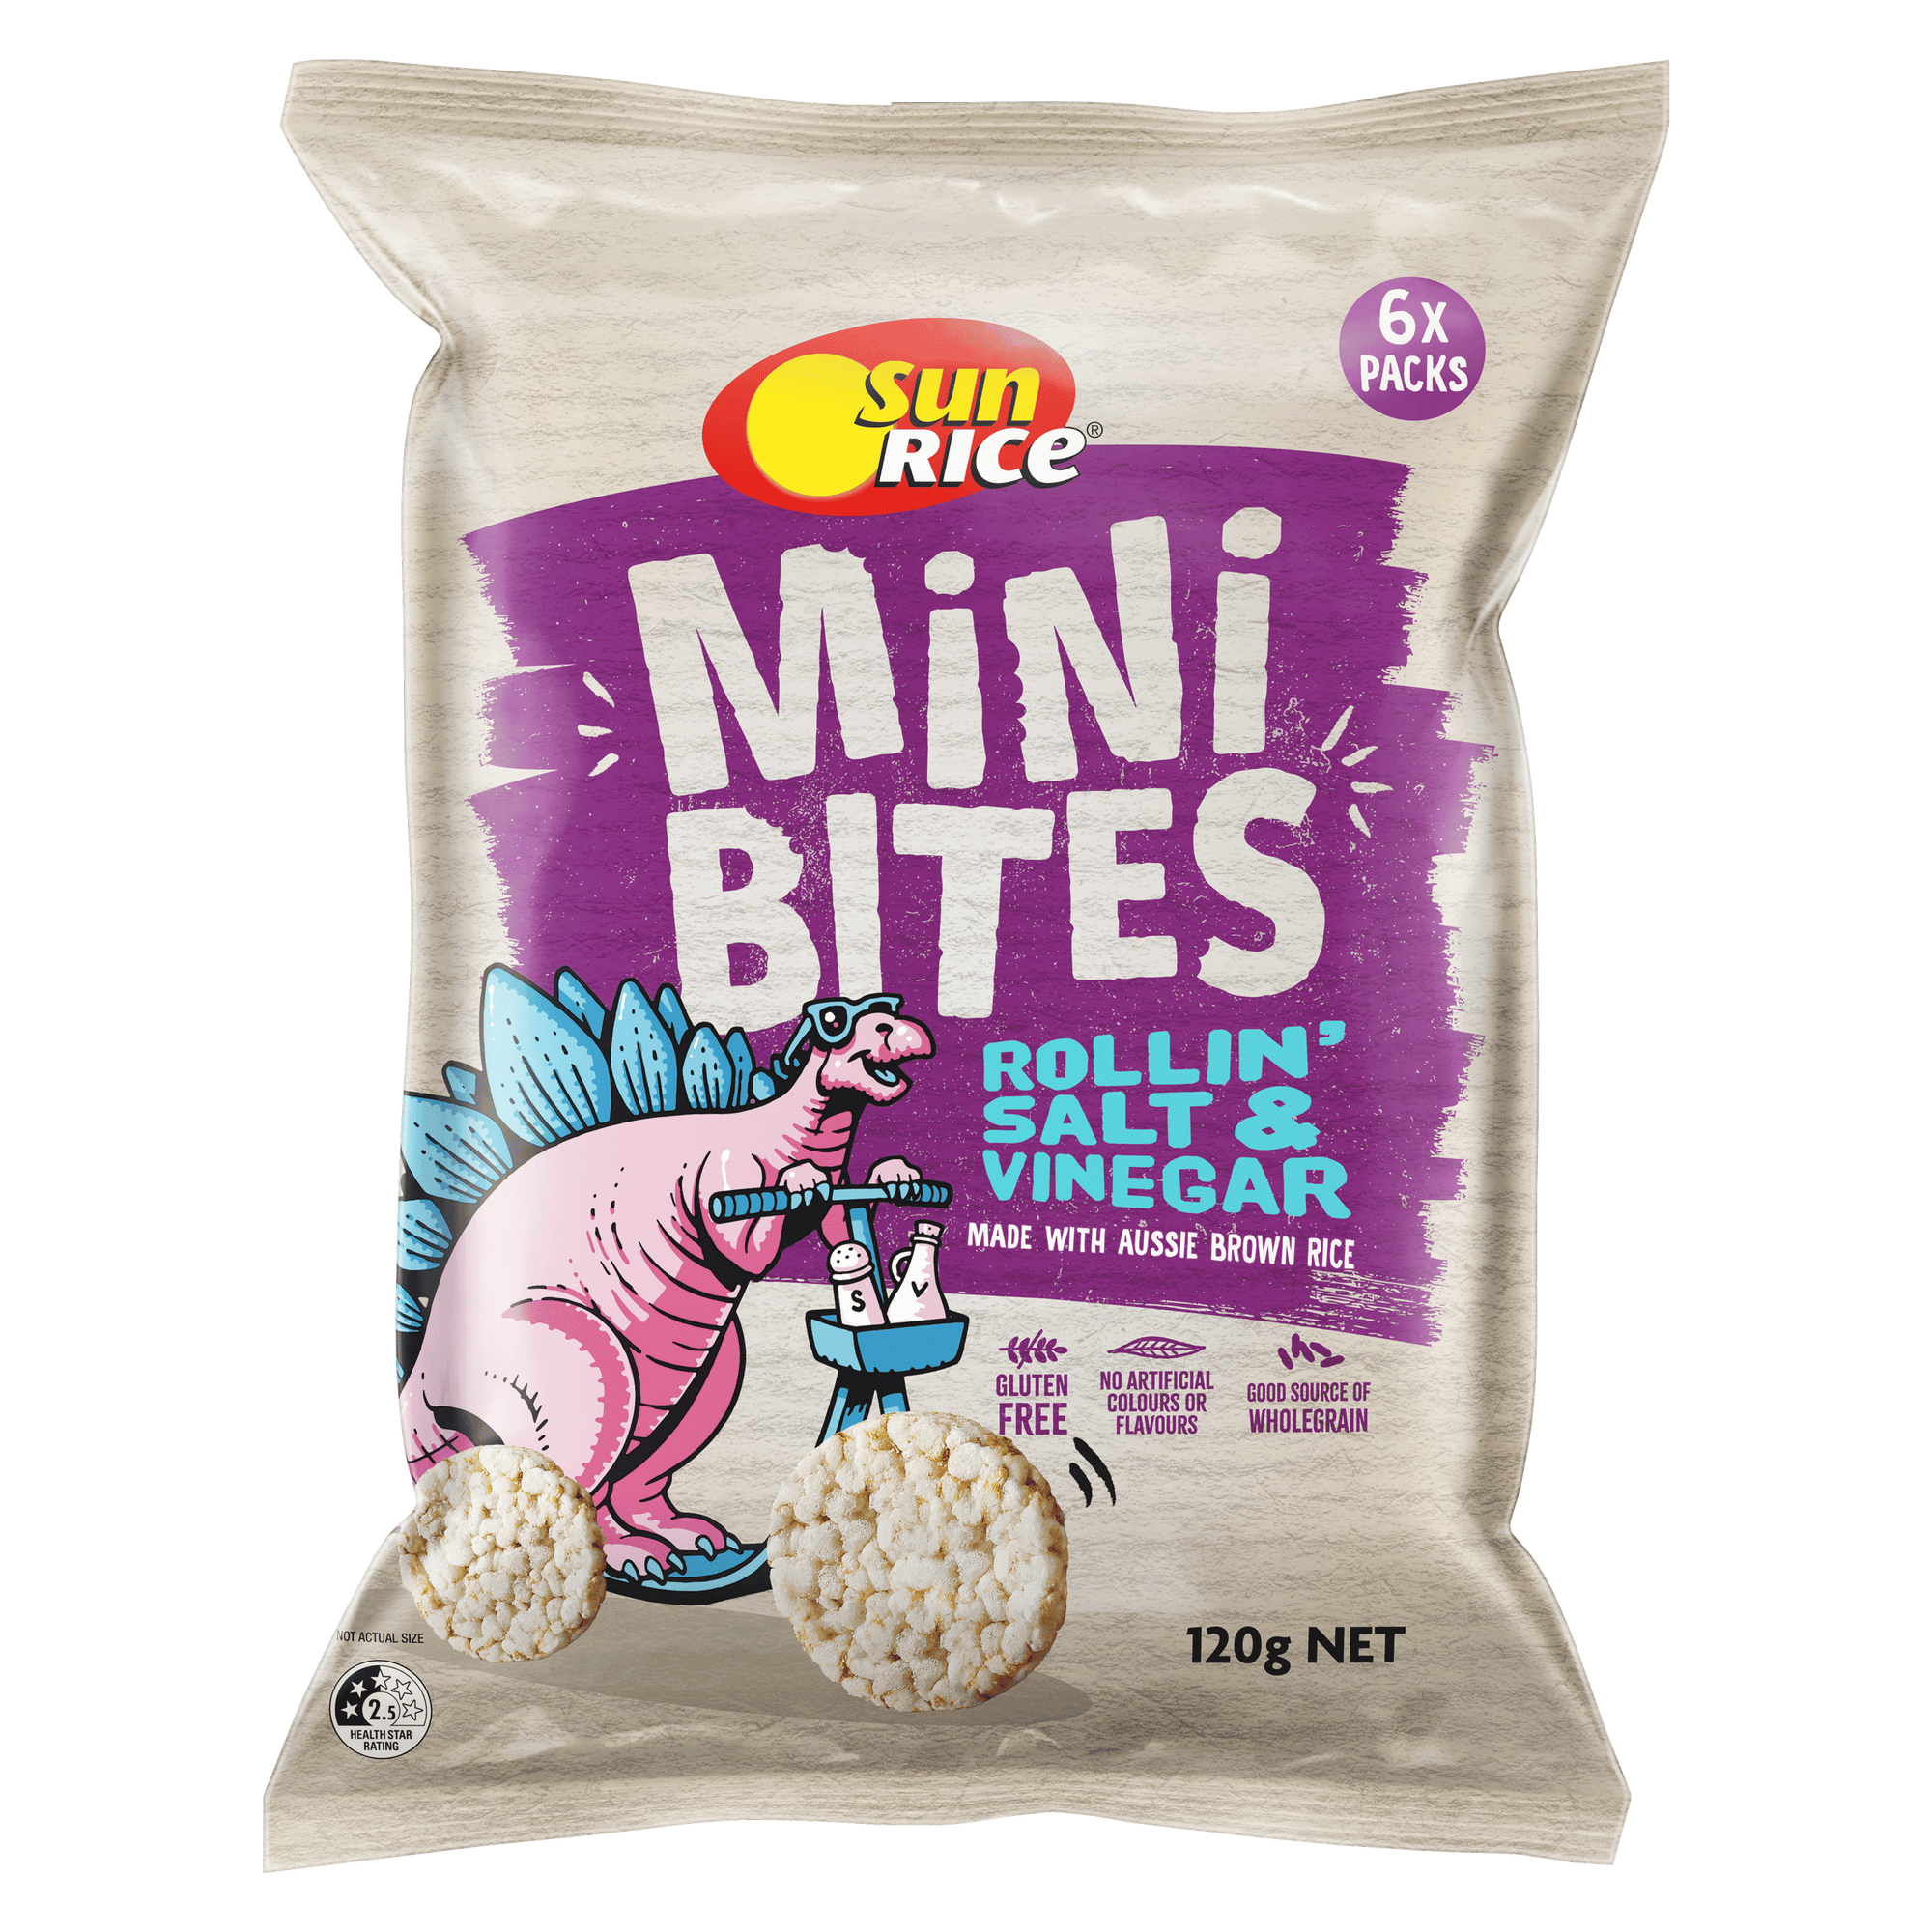 Sunrice Mini Bites Rollin' Salt & Vinegar 108g 6pk